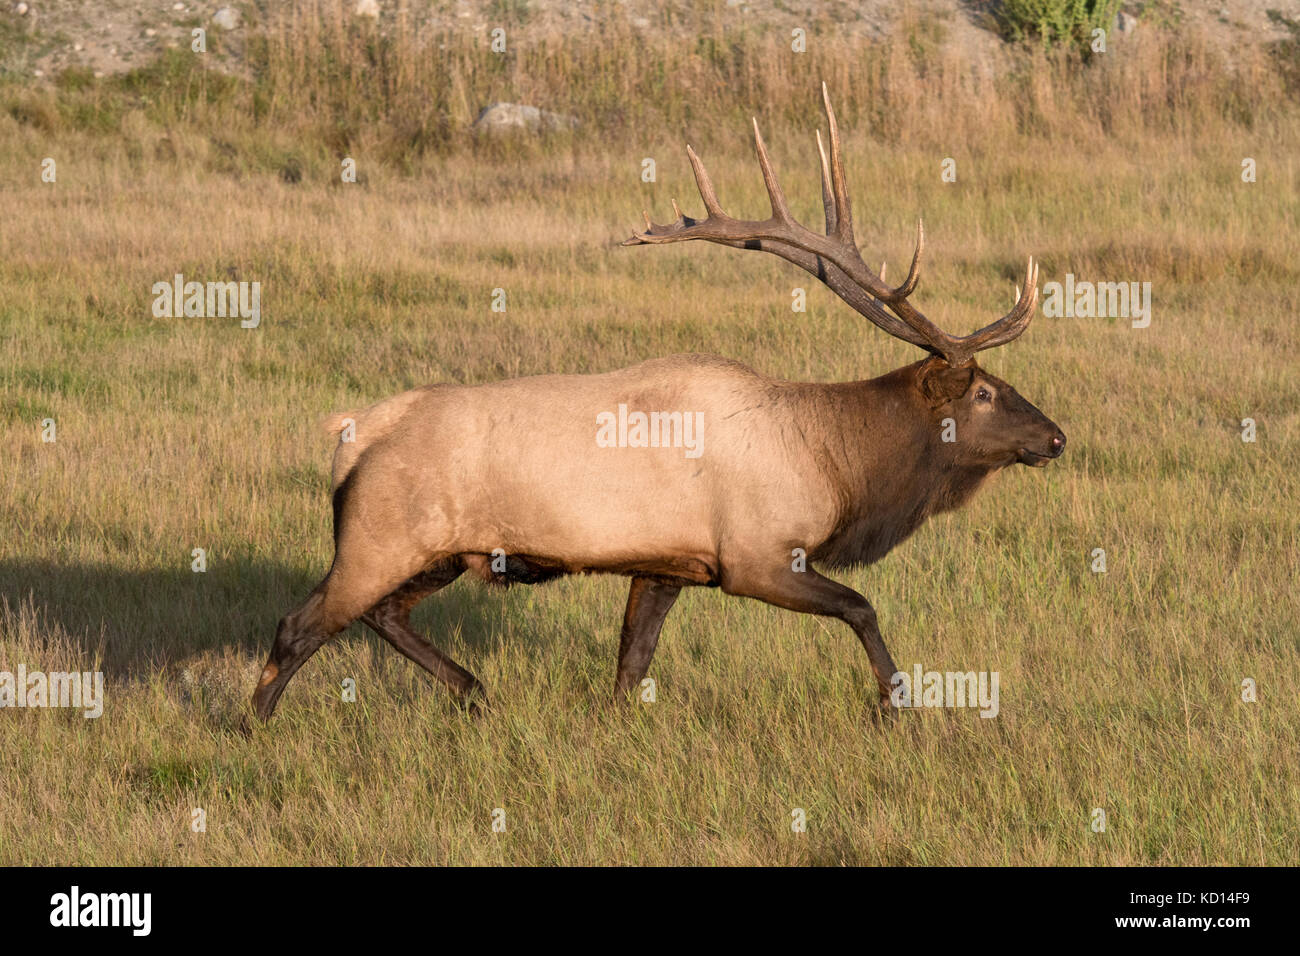 Bull Elk or wapiti walking through dried grasses, (Cervus canadensis), Jasper National Park, Alberta, Canada Stock Photo